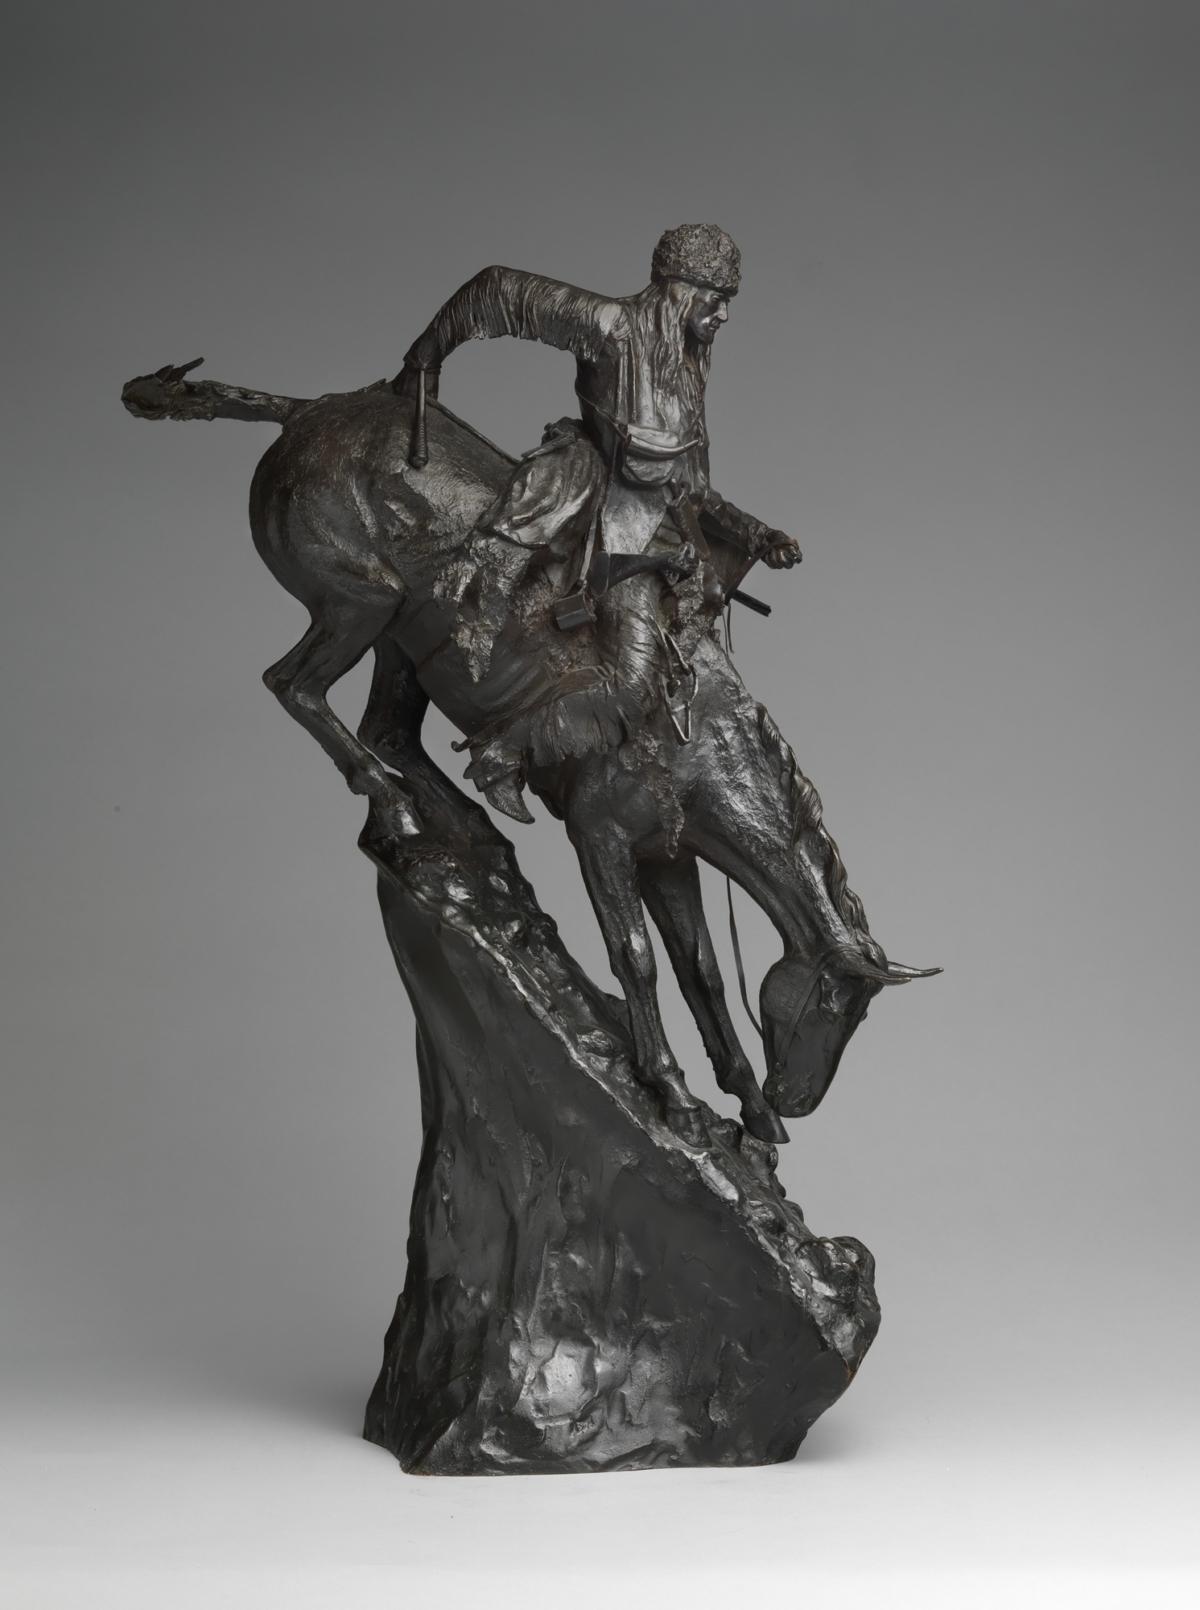 The bronze sculpture “The Mountain Man” by Frederic Remington, designed in 1903,<br/>depicts a buckskin-clad trapper descending a precarious mountain. (Public Domain)